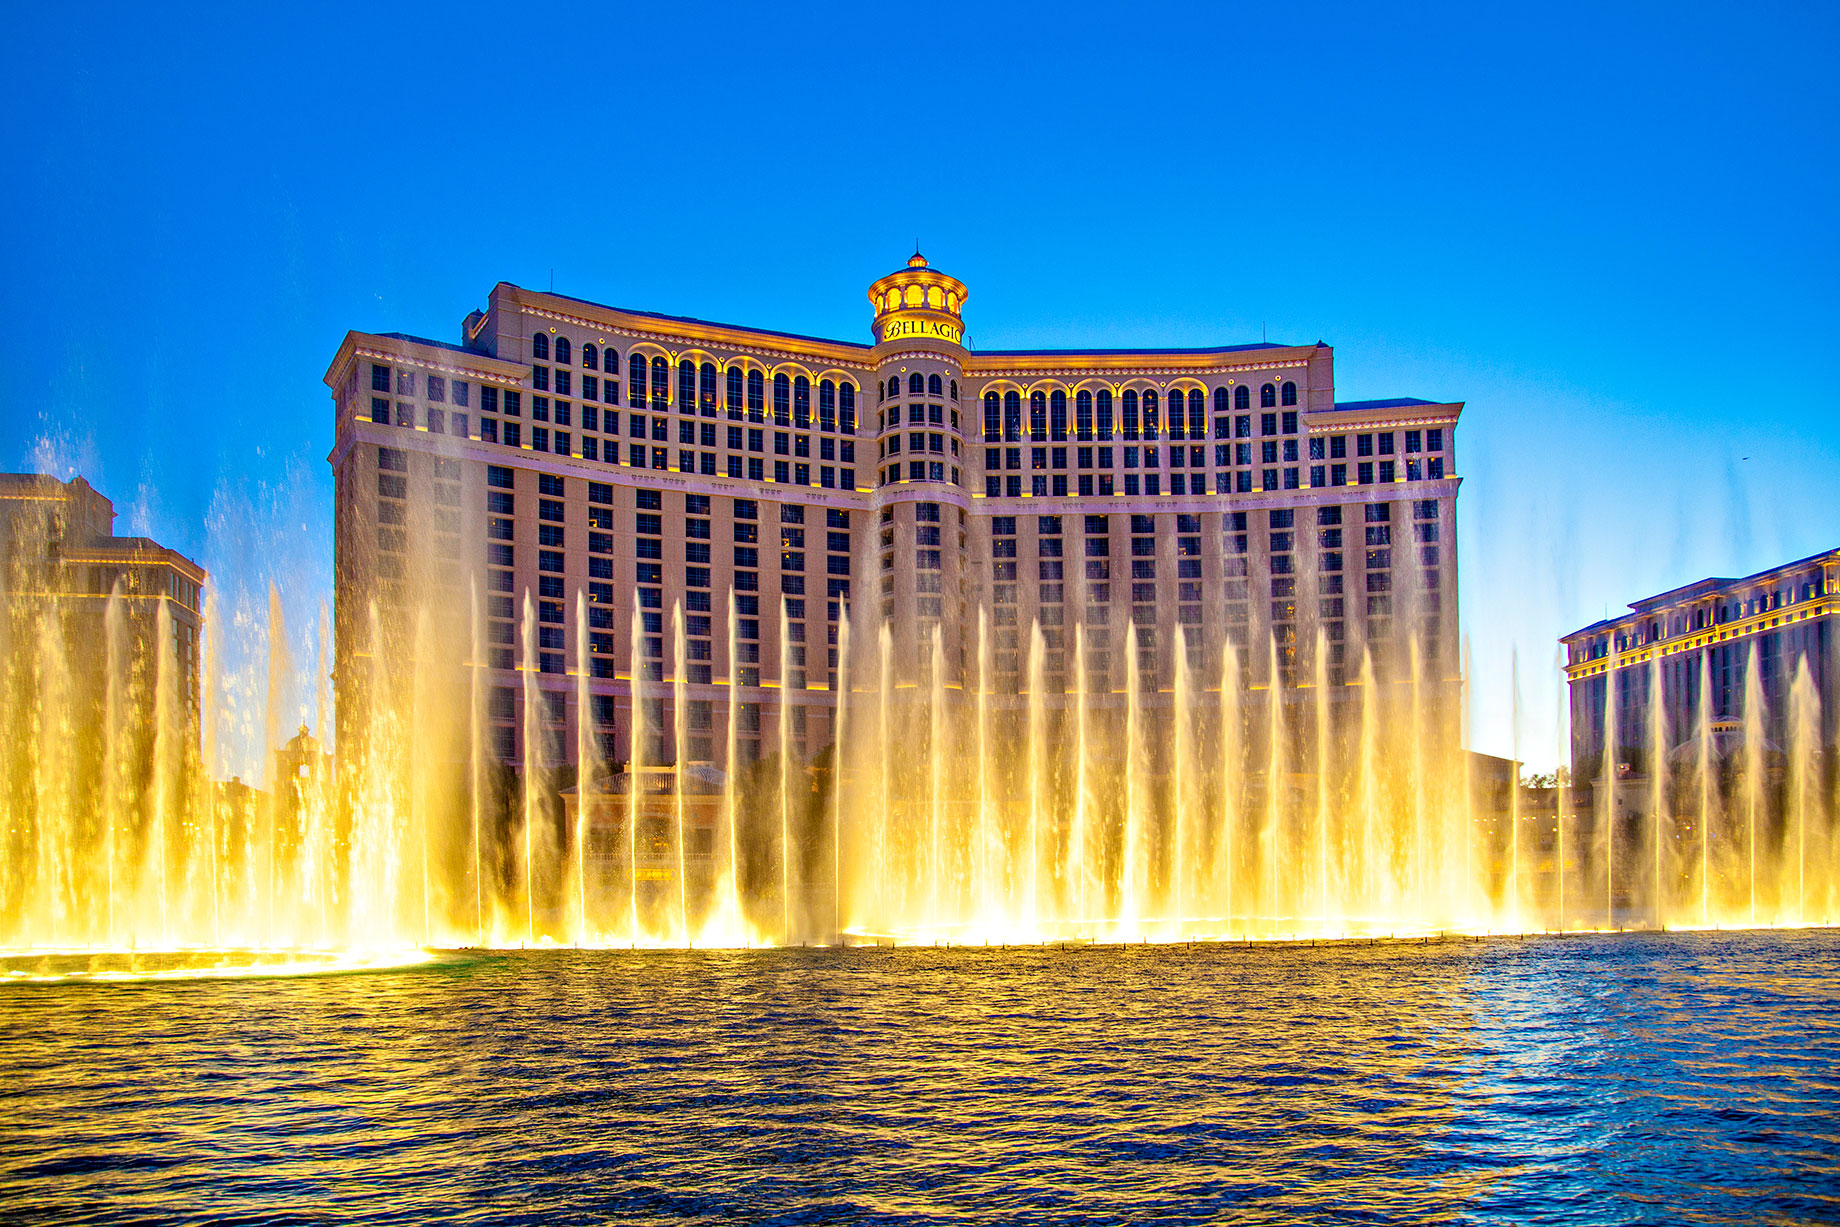 Bellagio Hotel Fountain Show - Las Vegas, Nevada, USA